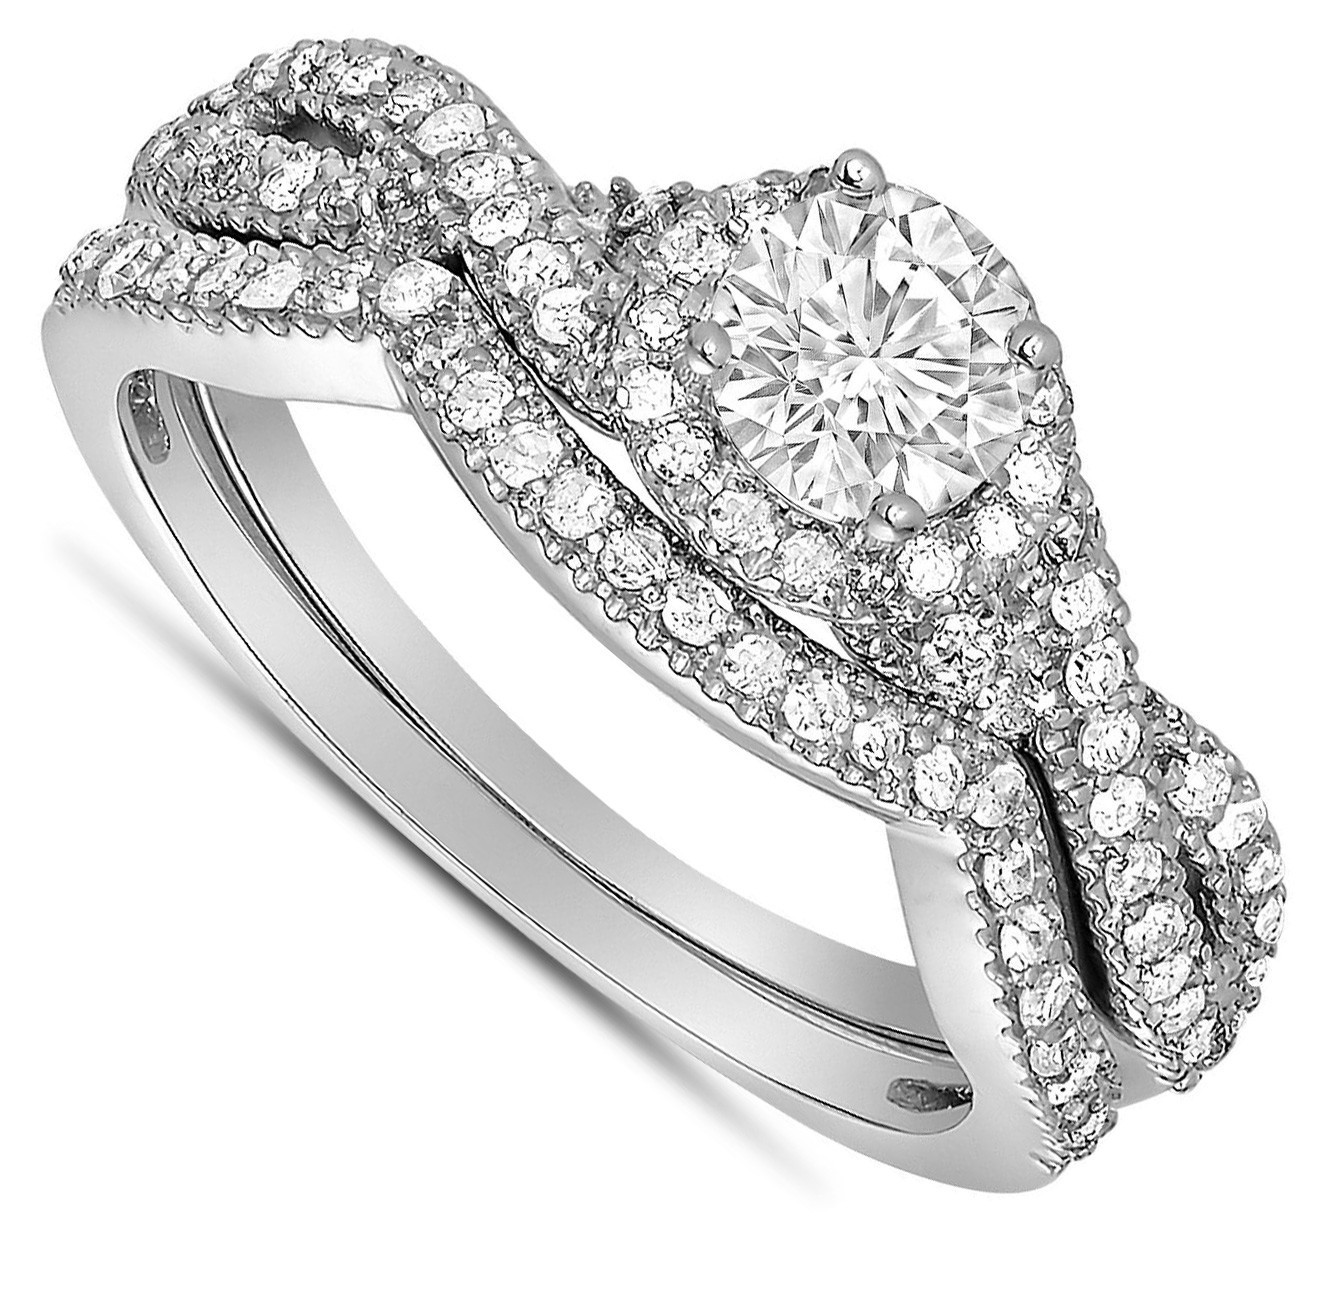 Infinity Wedding Rings
 2 Carat Round Diamond Infinity Wedding Ring Set in White